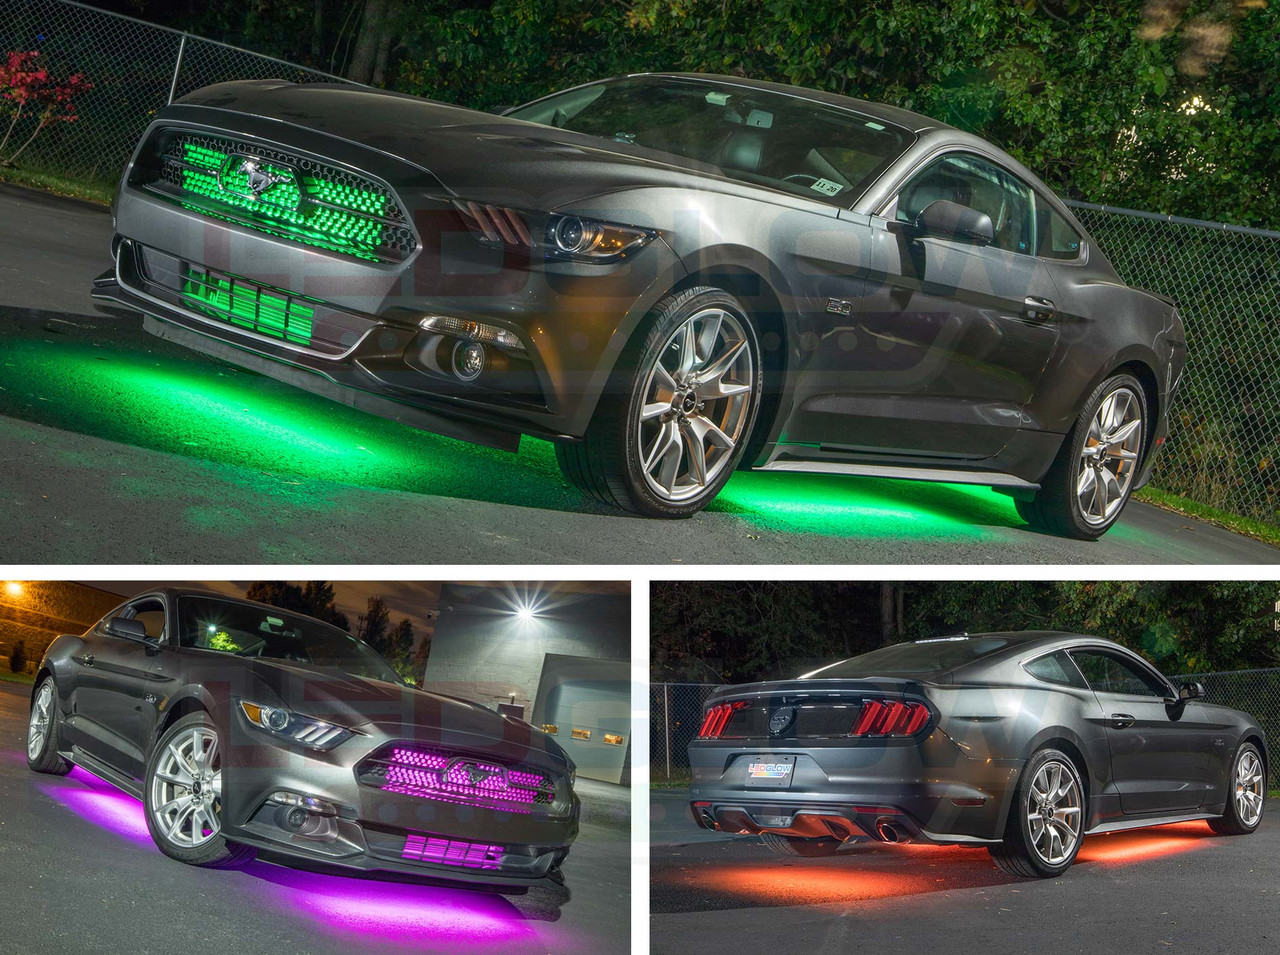 Million Color Wireless LED Car Underbody Lighting Kit